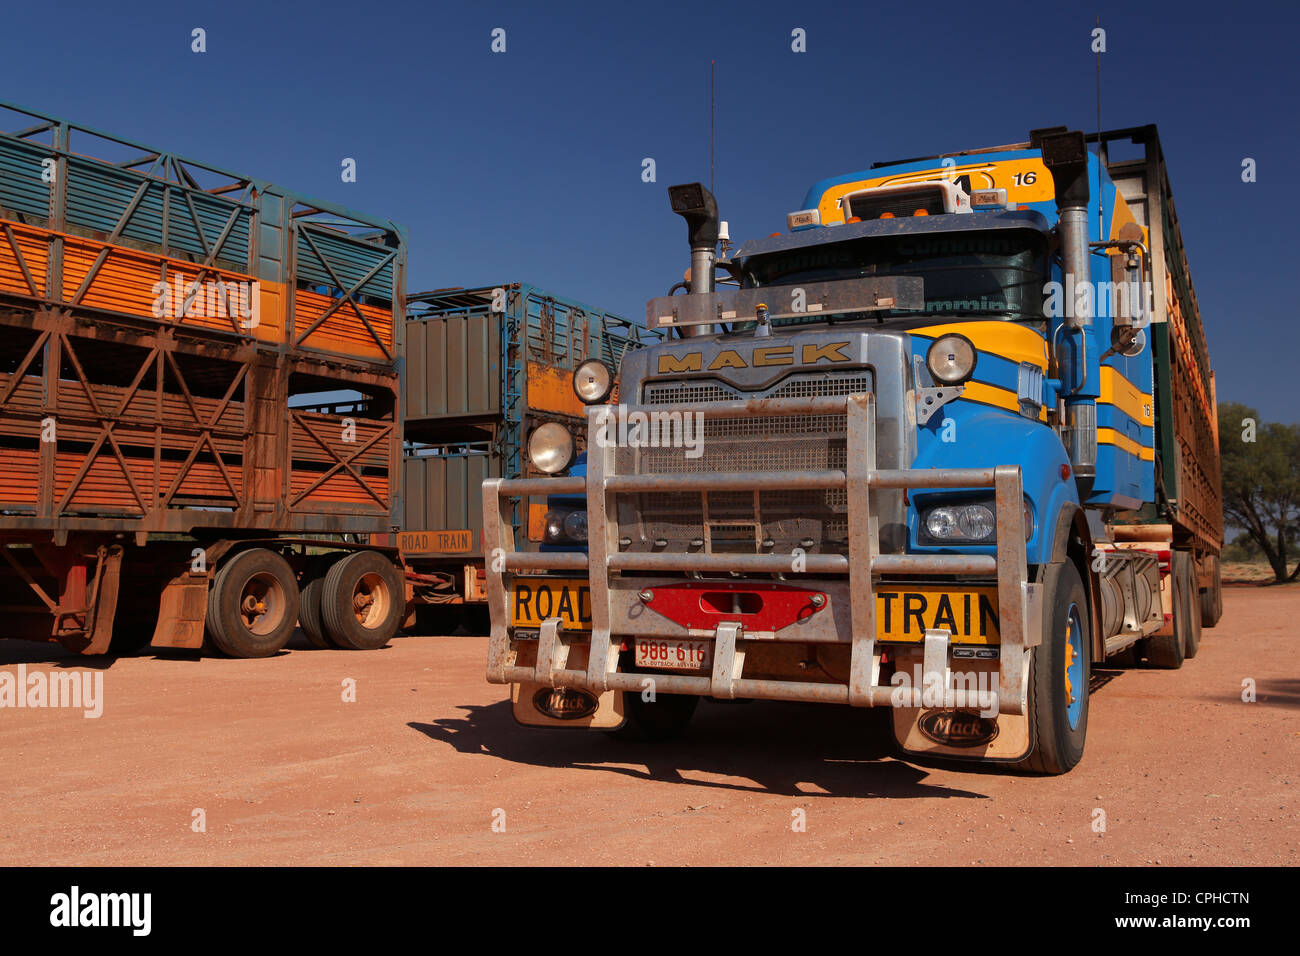 Road Trains, Trucks, TRUCK, truck, cattle transport, transport, car, automobile, desert, outback, dust, break, stop, Roadhouse, Stock Photo